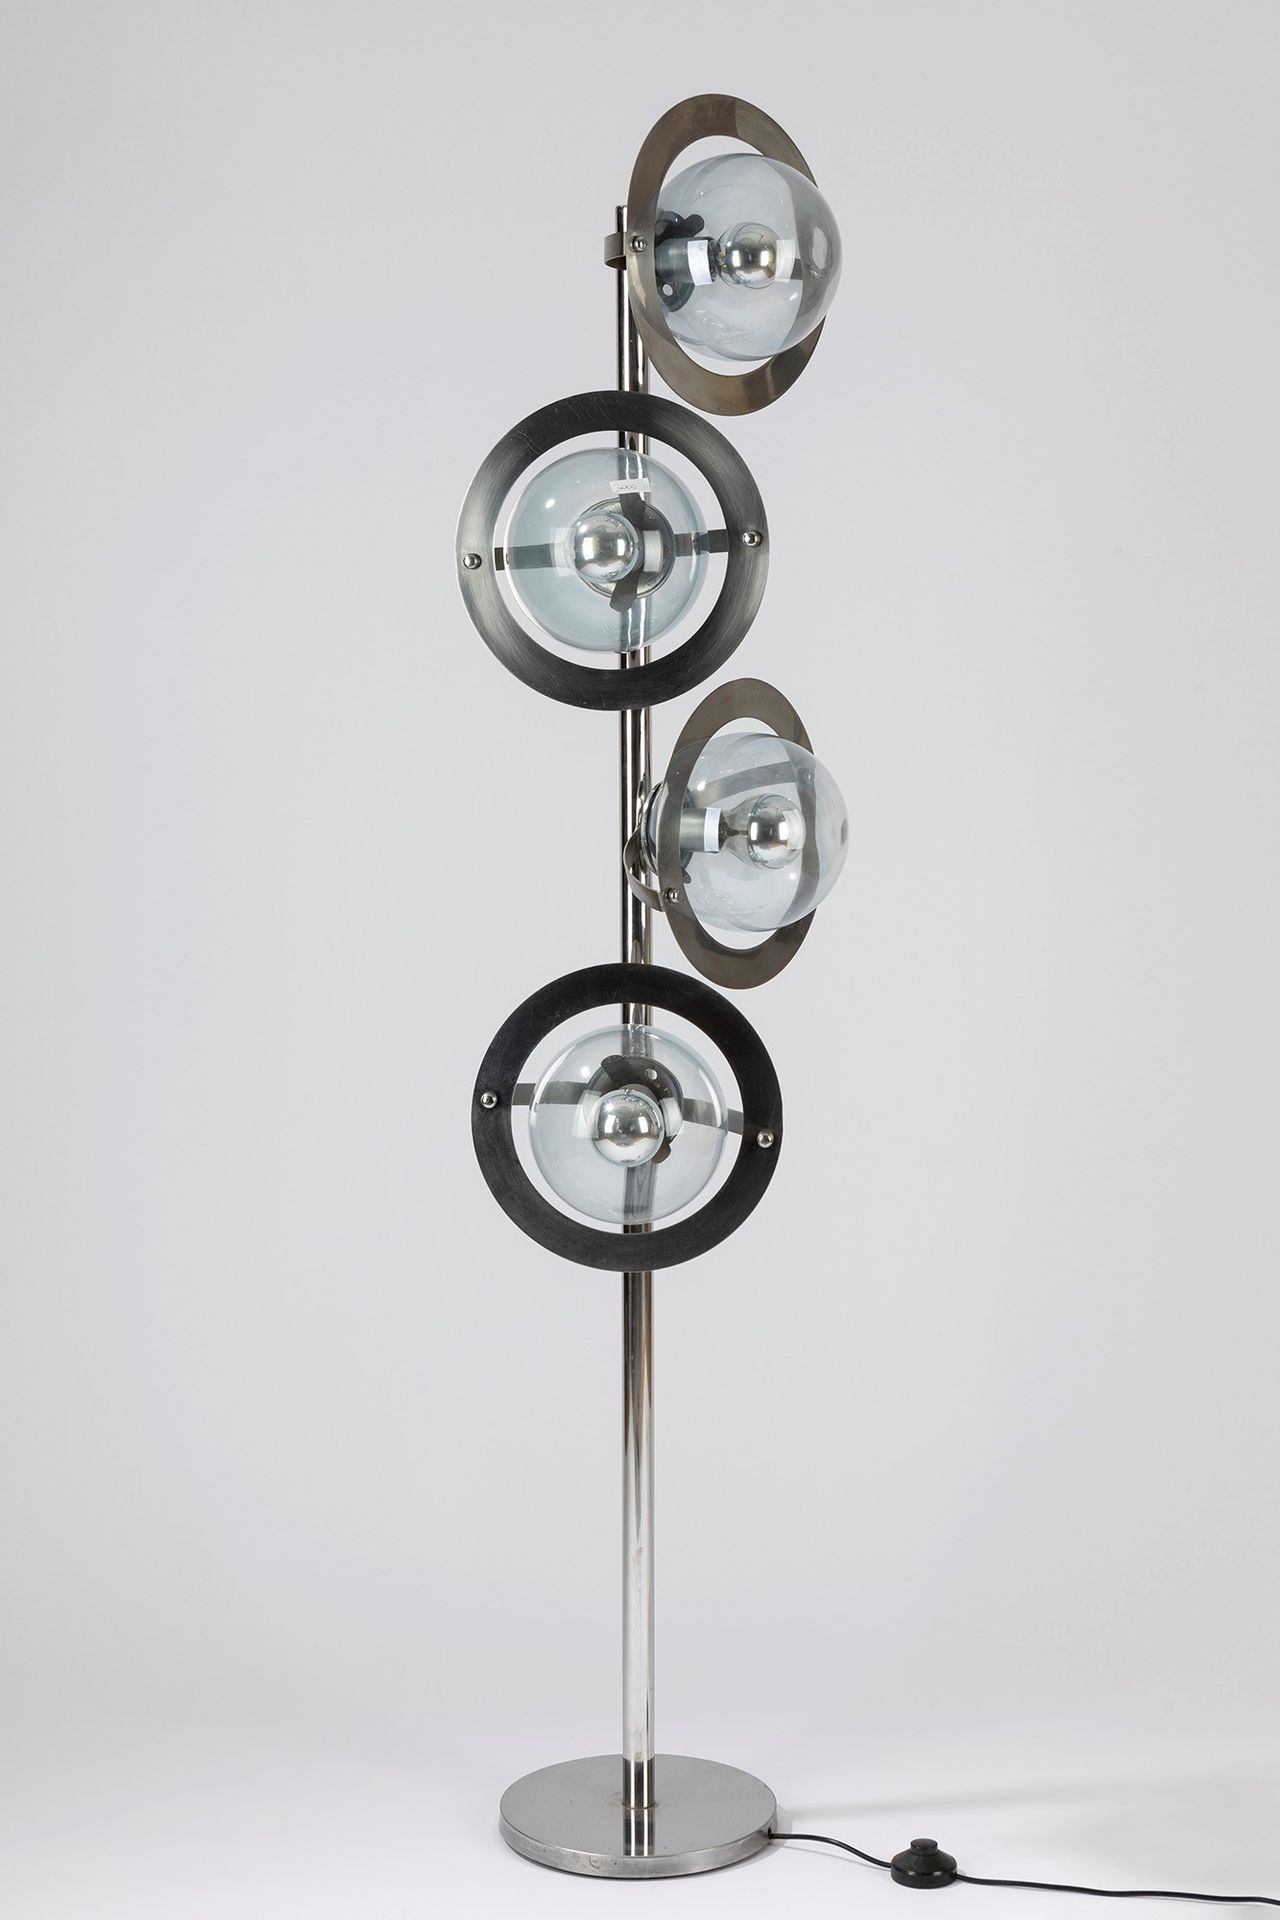 ITALIAN MANUFACTURE 落地灯，70年代

dm cm 30, H cm 160
镀铬金属杆和环，支持球形玻璃扩散器。